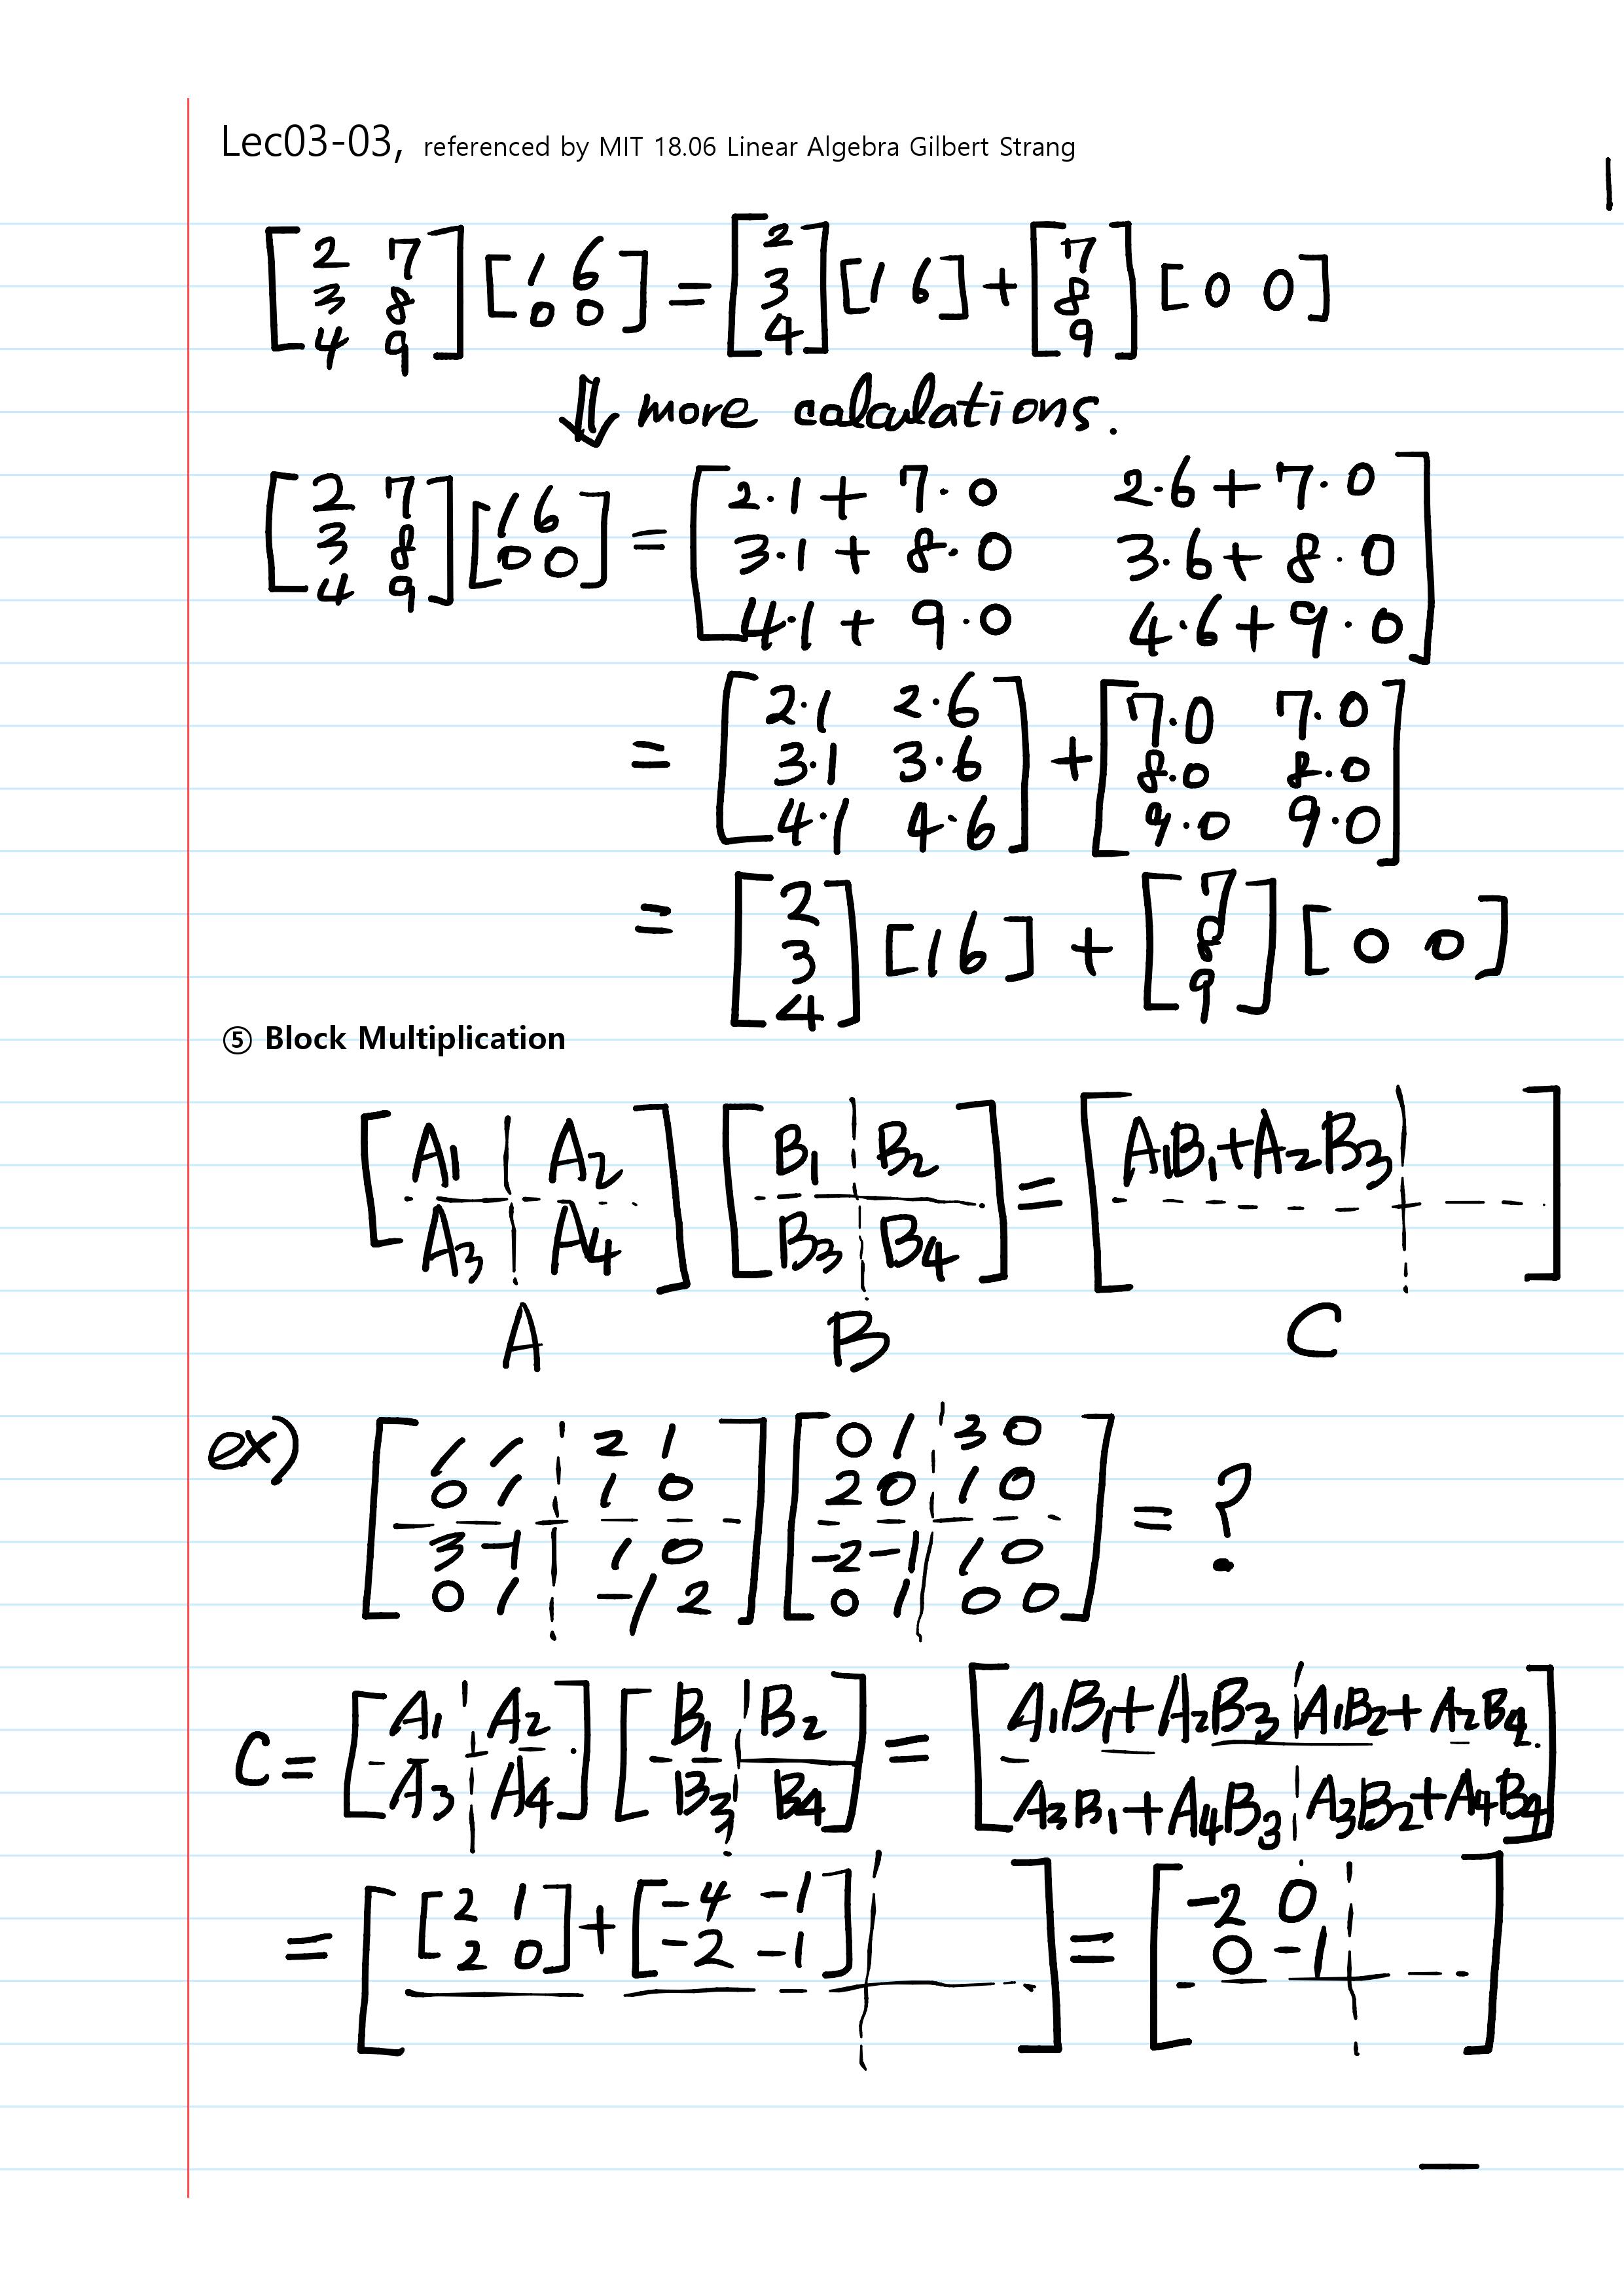 basics of linear algebra for machine learning pdf download